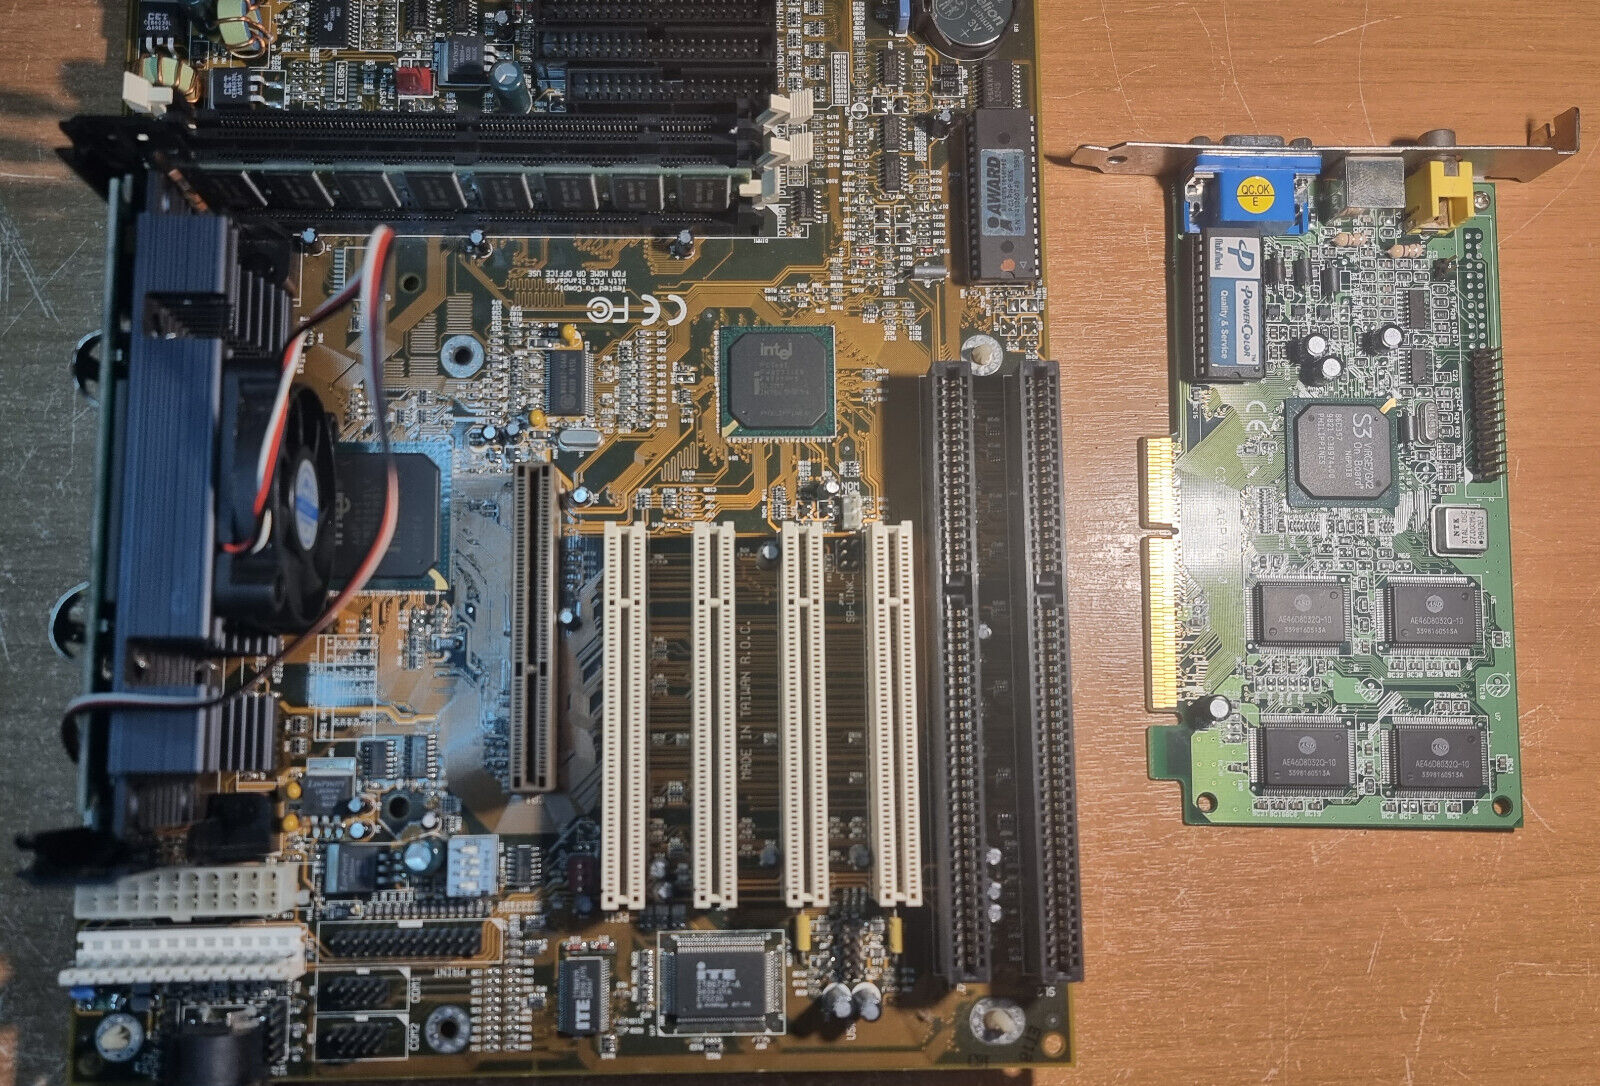 DFI P2XBL rev.A motherboard + Celeron 333MHz + 32MB Ram + S3 Virge/GX2